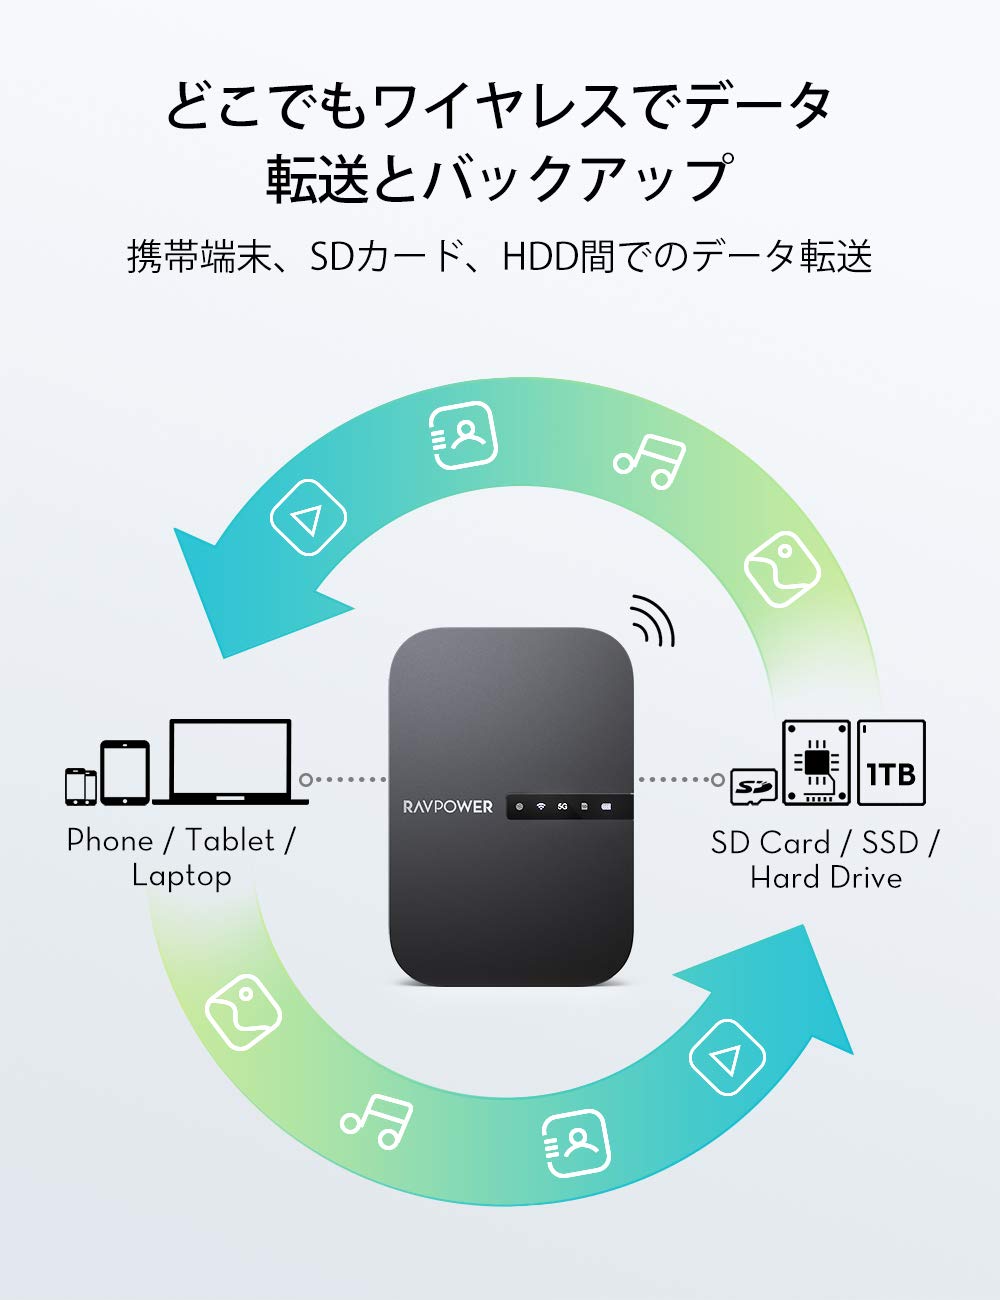 FileHub RP-WD009 | RAVPower Japan RAVPower 多機能型ワイヤレス